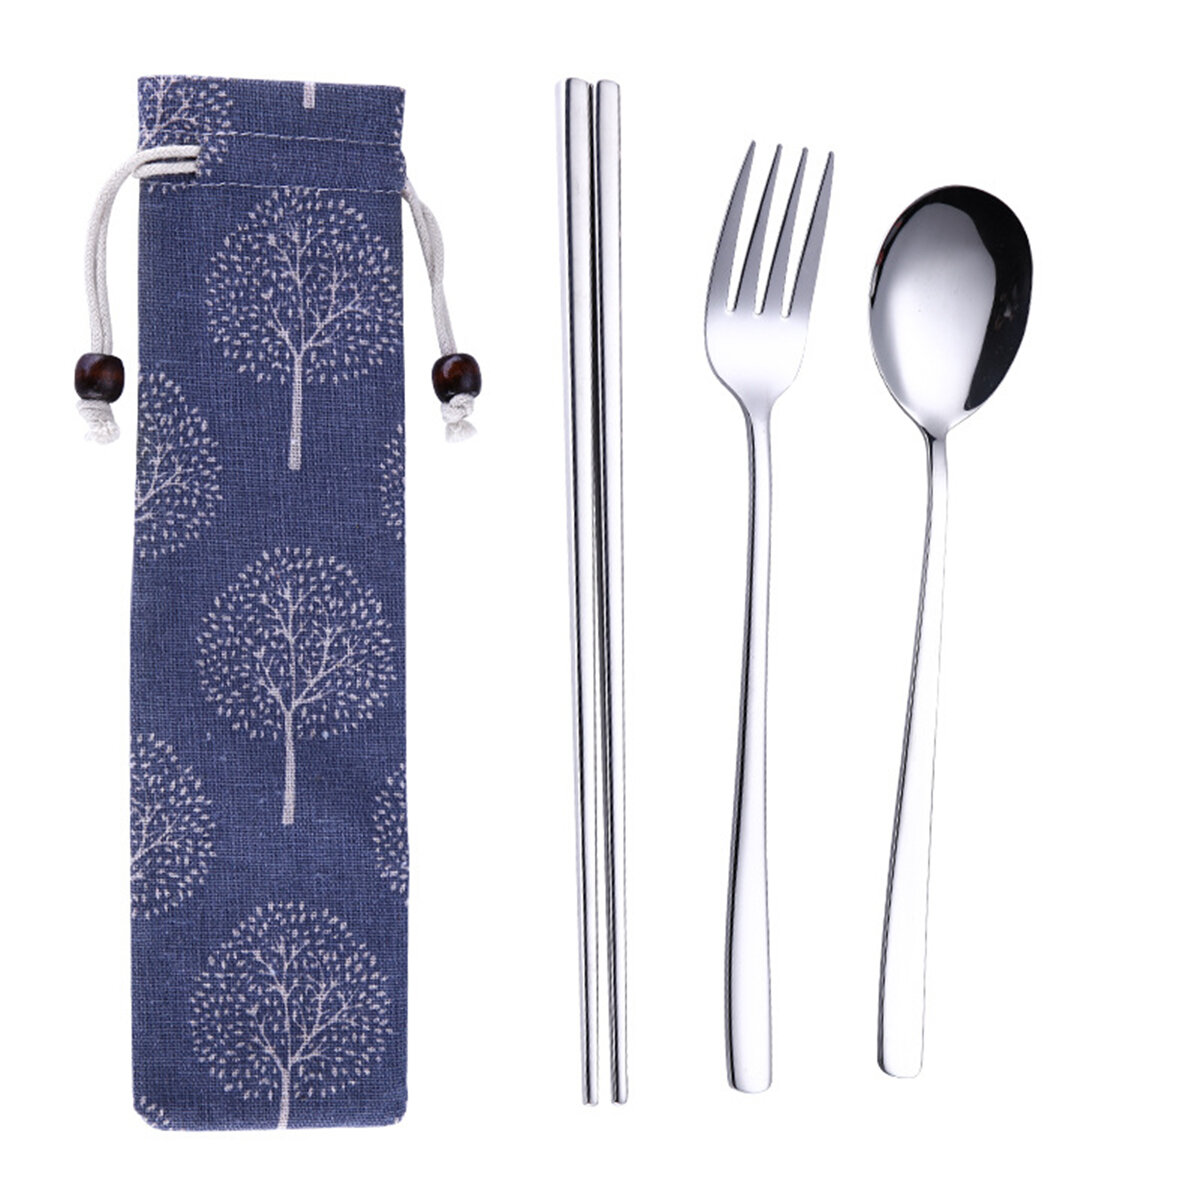 3Pcs/5Pcs Stainless Steel Tableware Set Titanium Colorful Fork Spoon Chopsticks Cutlery Flatware Camping Picnic